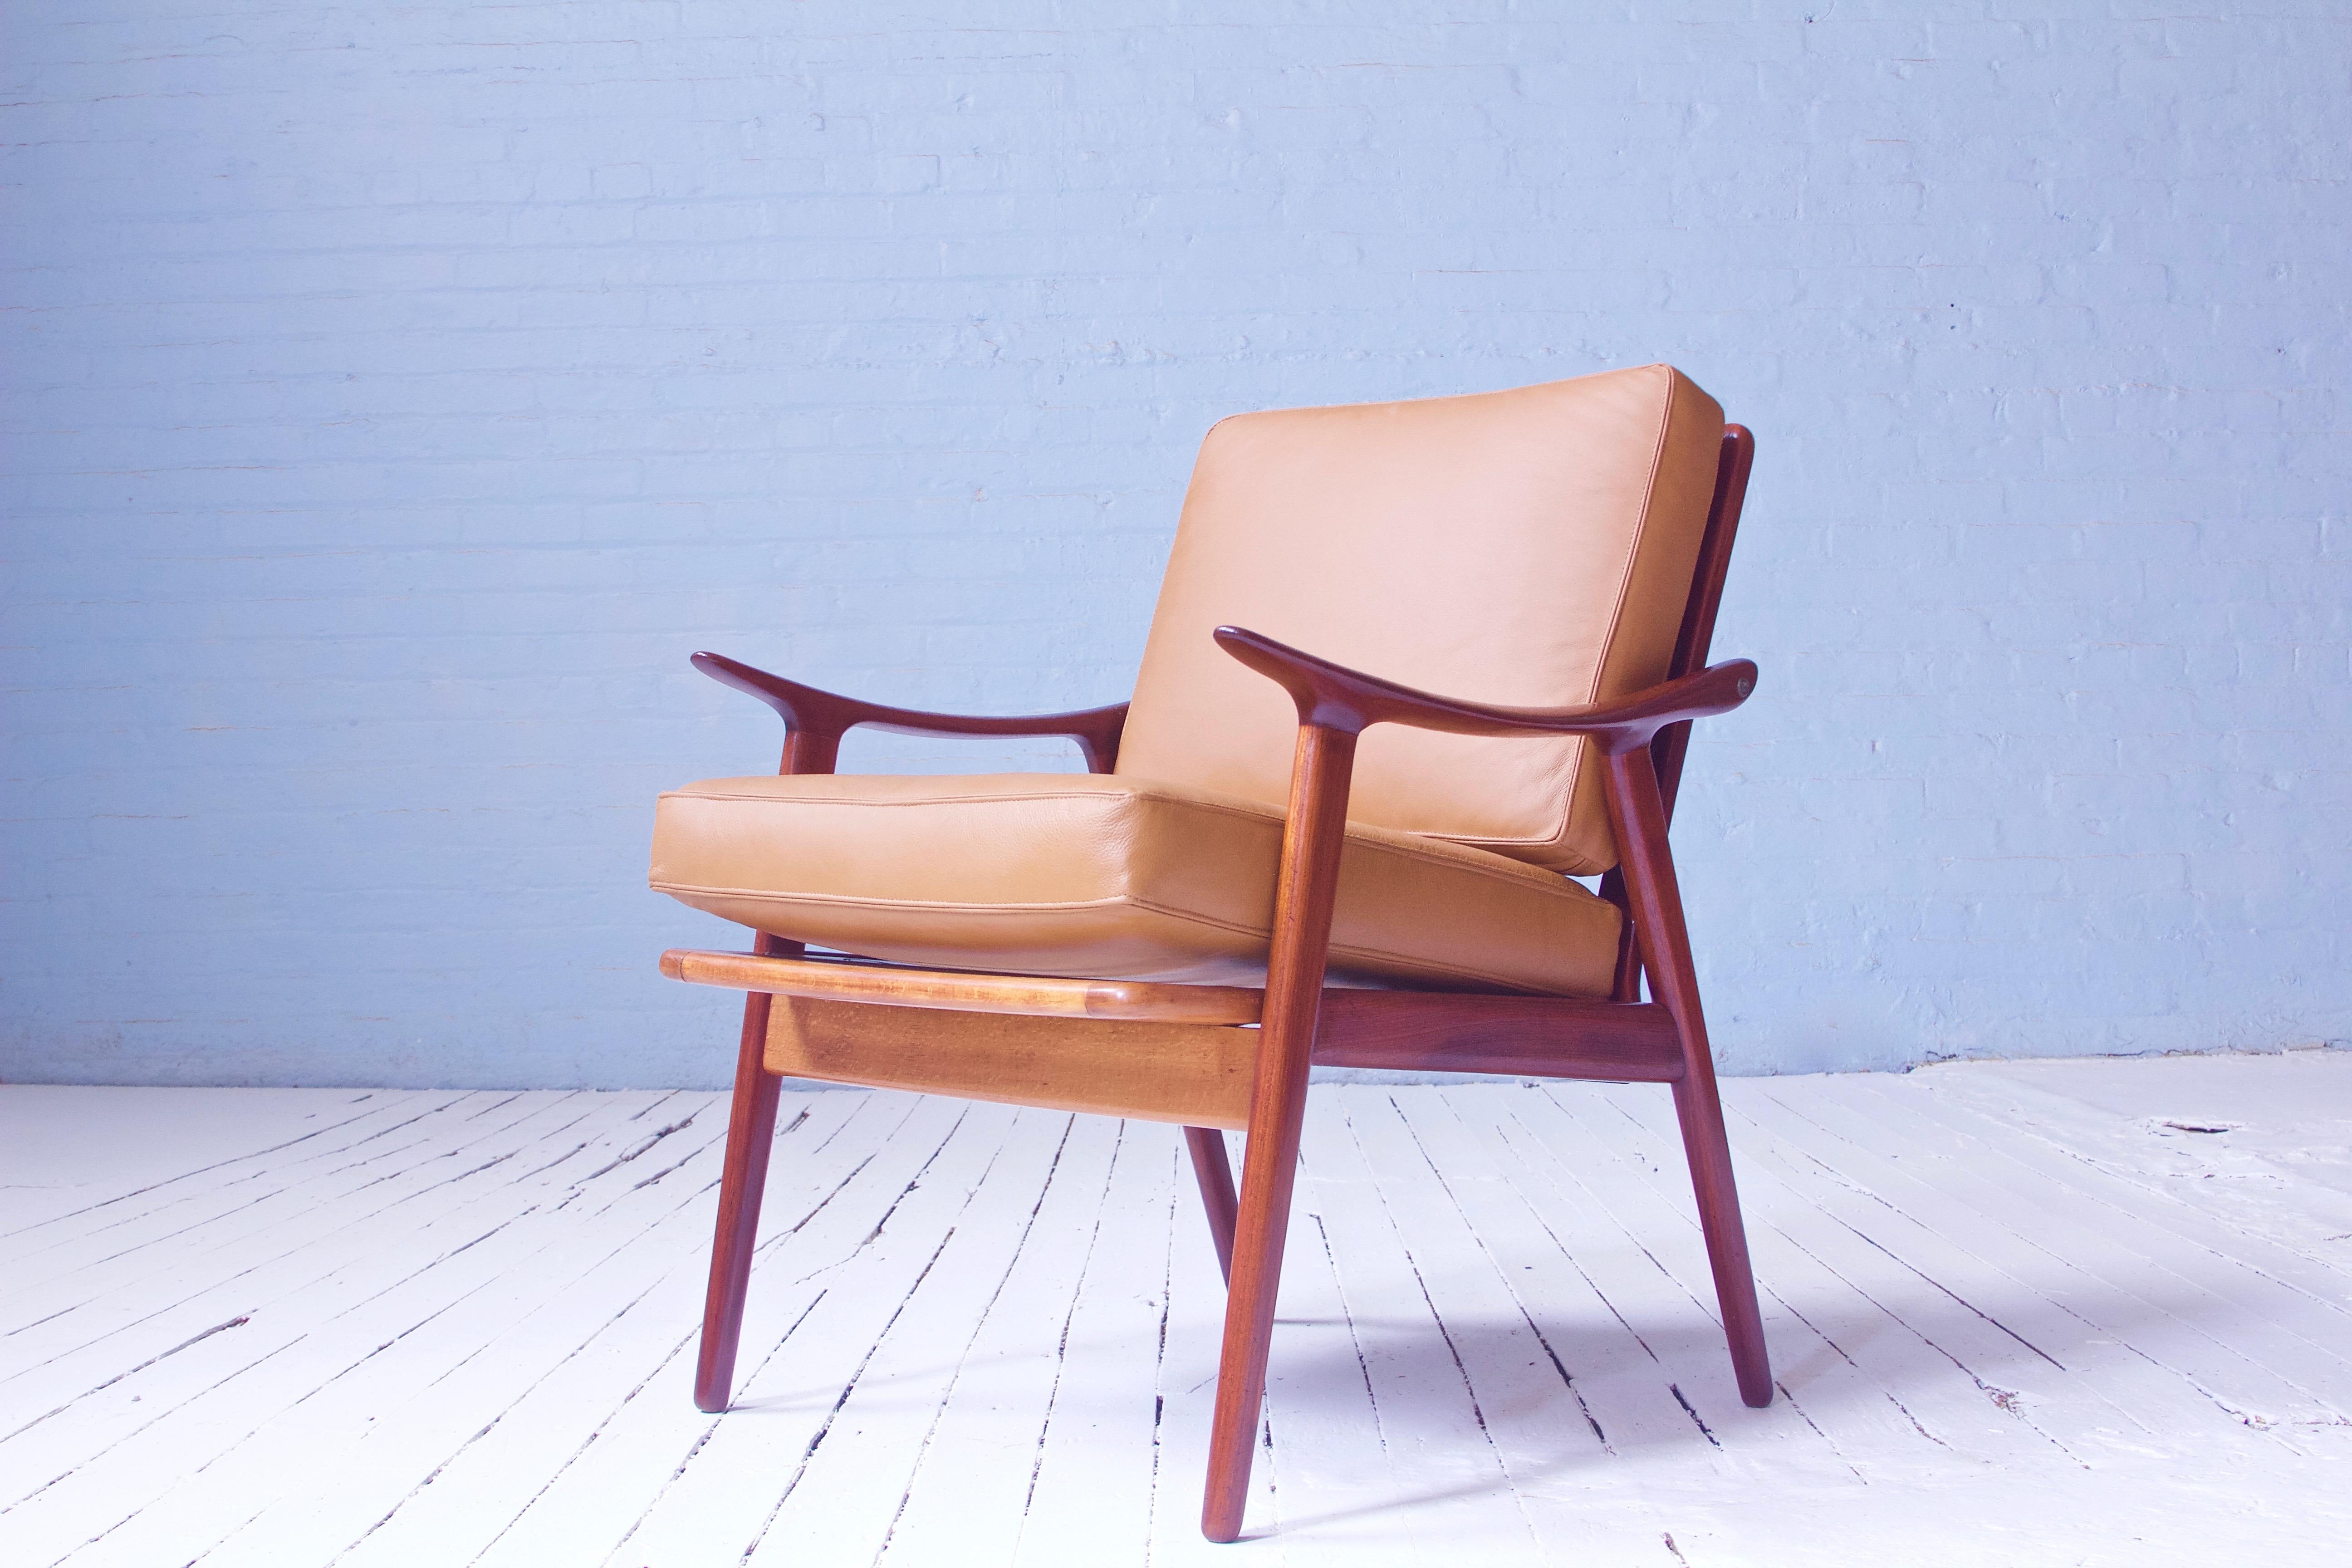 Scandinavian Modern Vintage Fredrik A. Kayser Teak, Leather & Brass Easy Chair #563, Norway, 1950s For Sale